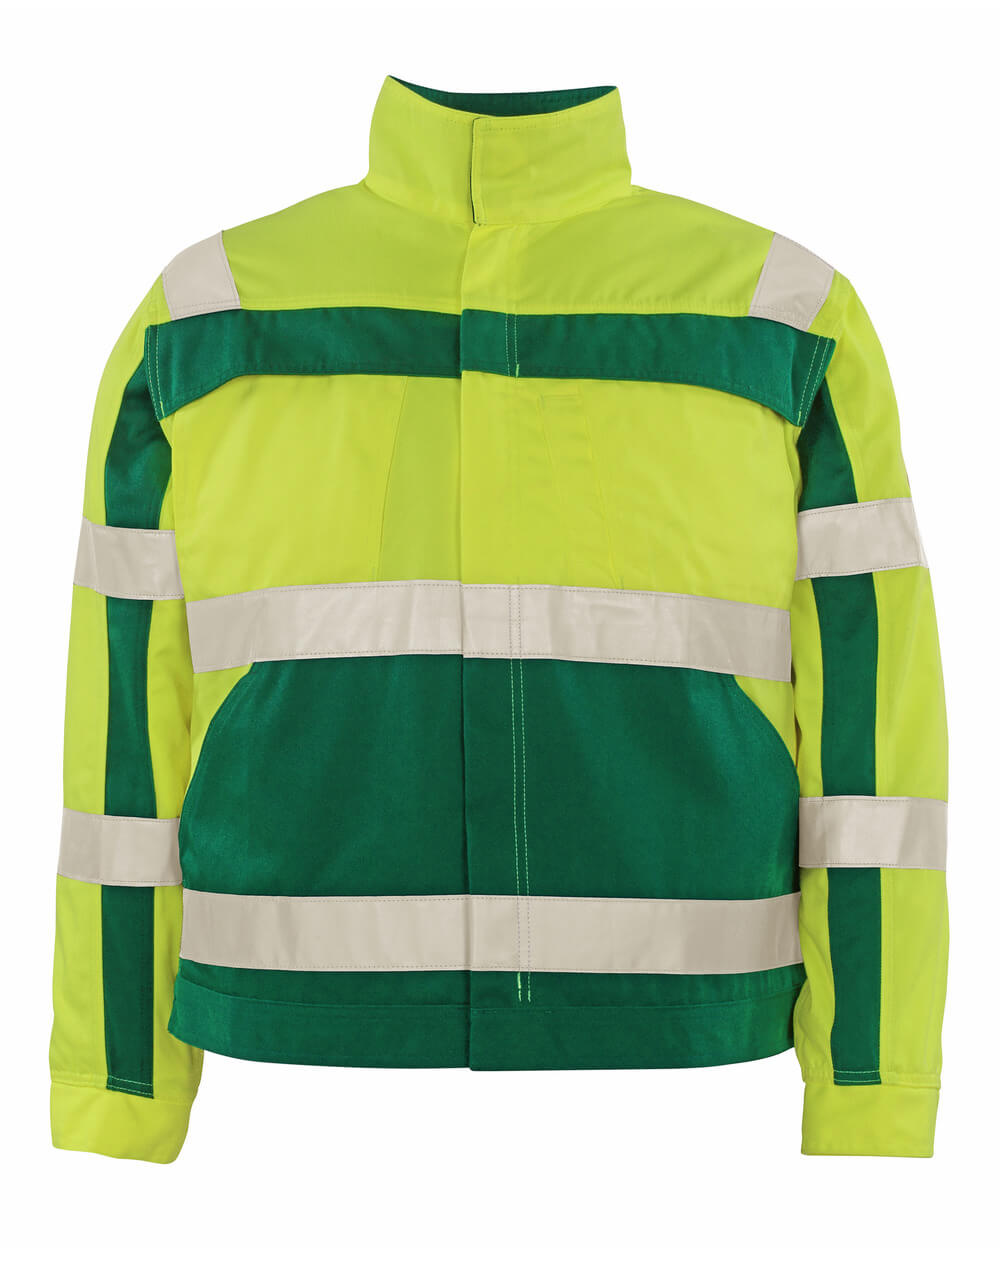 Mascot SAFE COMPETE  Cameta Jacket 07109 hi-vis yellow/green